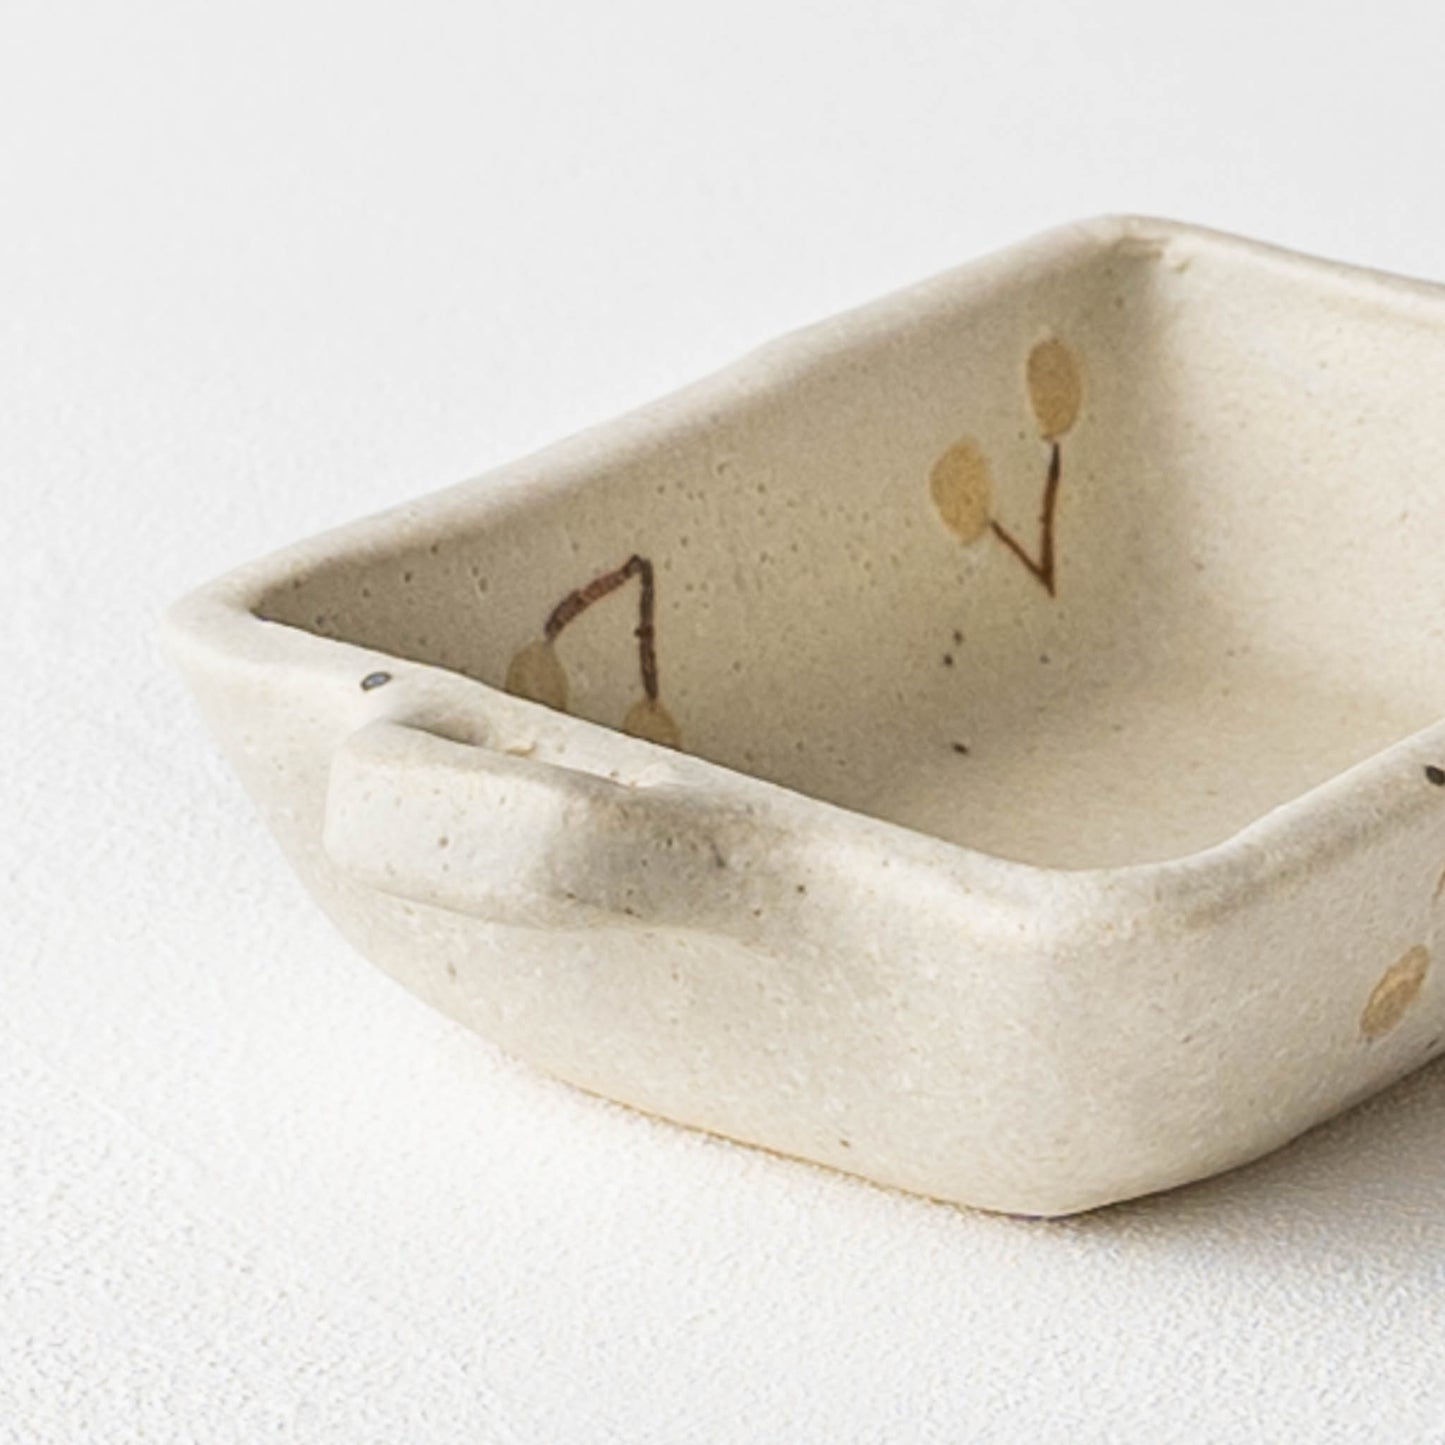 Square bowl with ears Cherry A Off-white | Haruko Harada